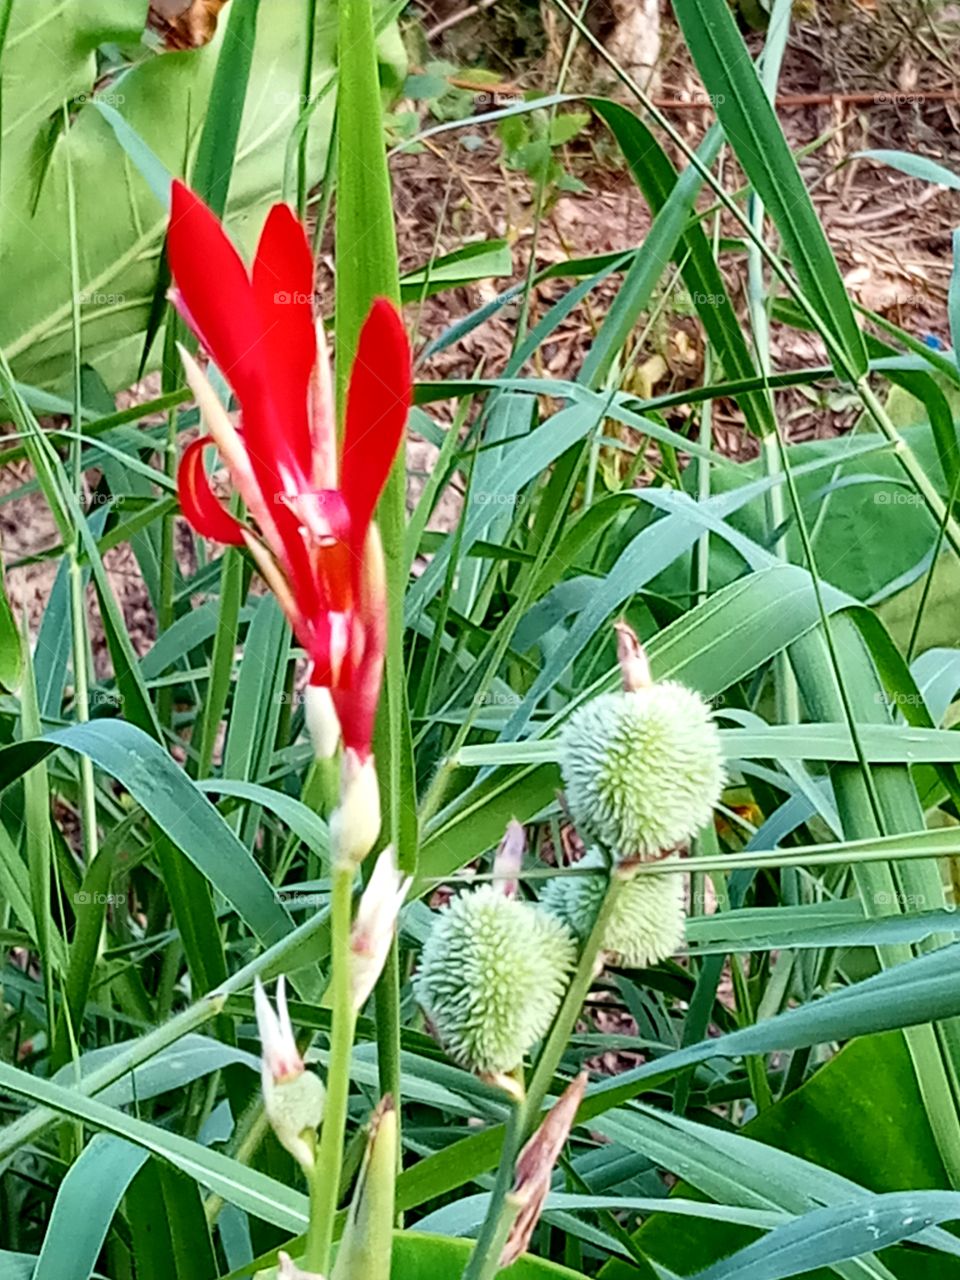 red frangipani flowers